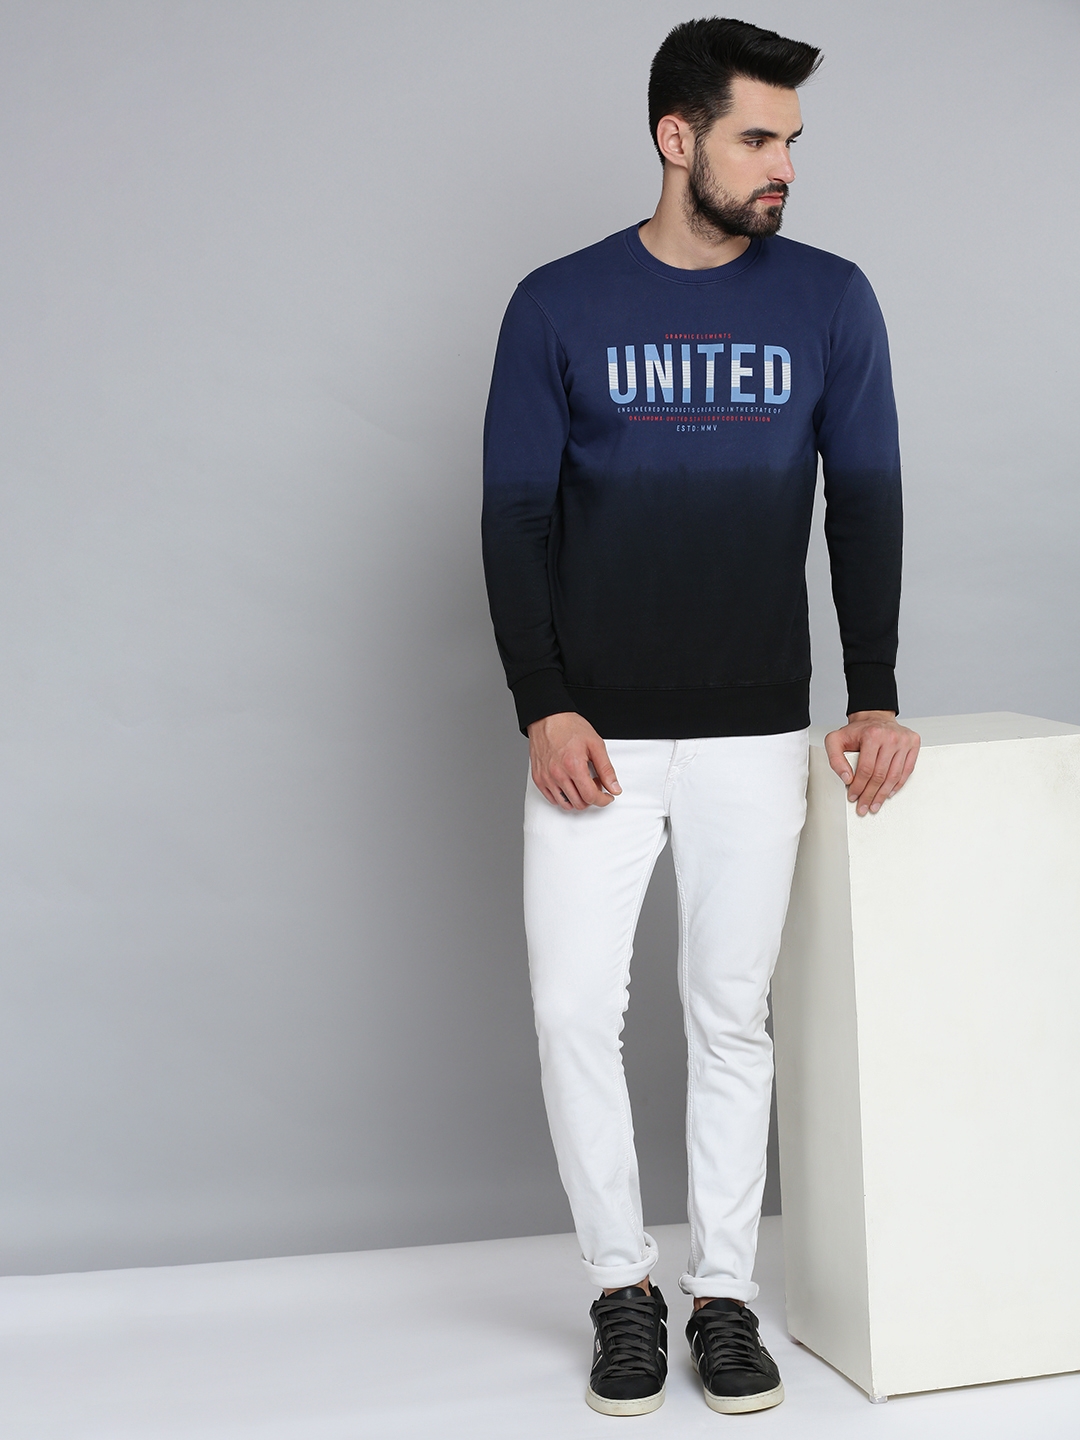 Men's Blue Cotton Solid Sweatshirts